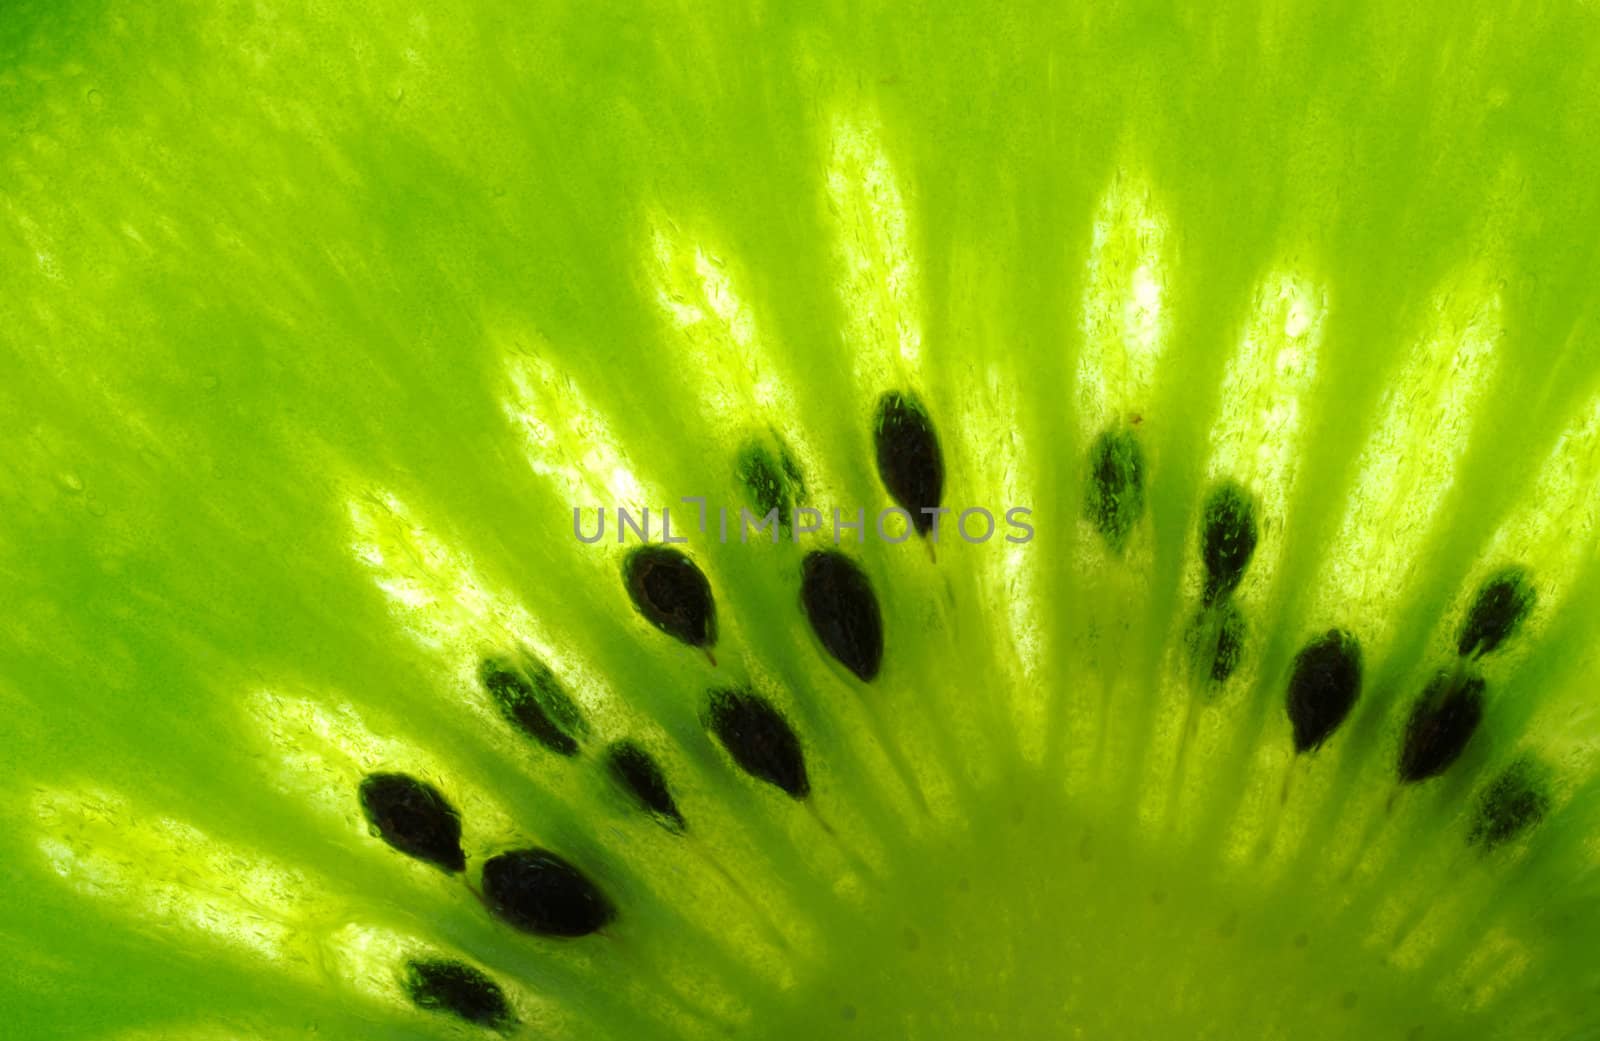 Macro shot of a kiwi slice